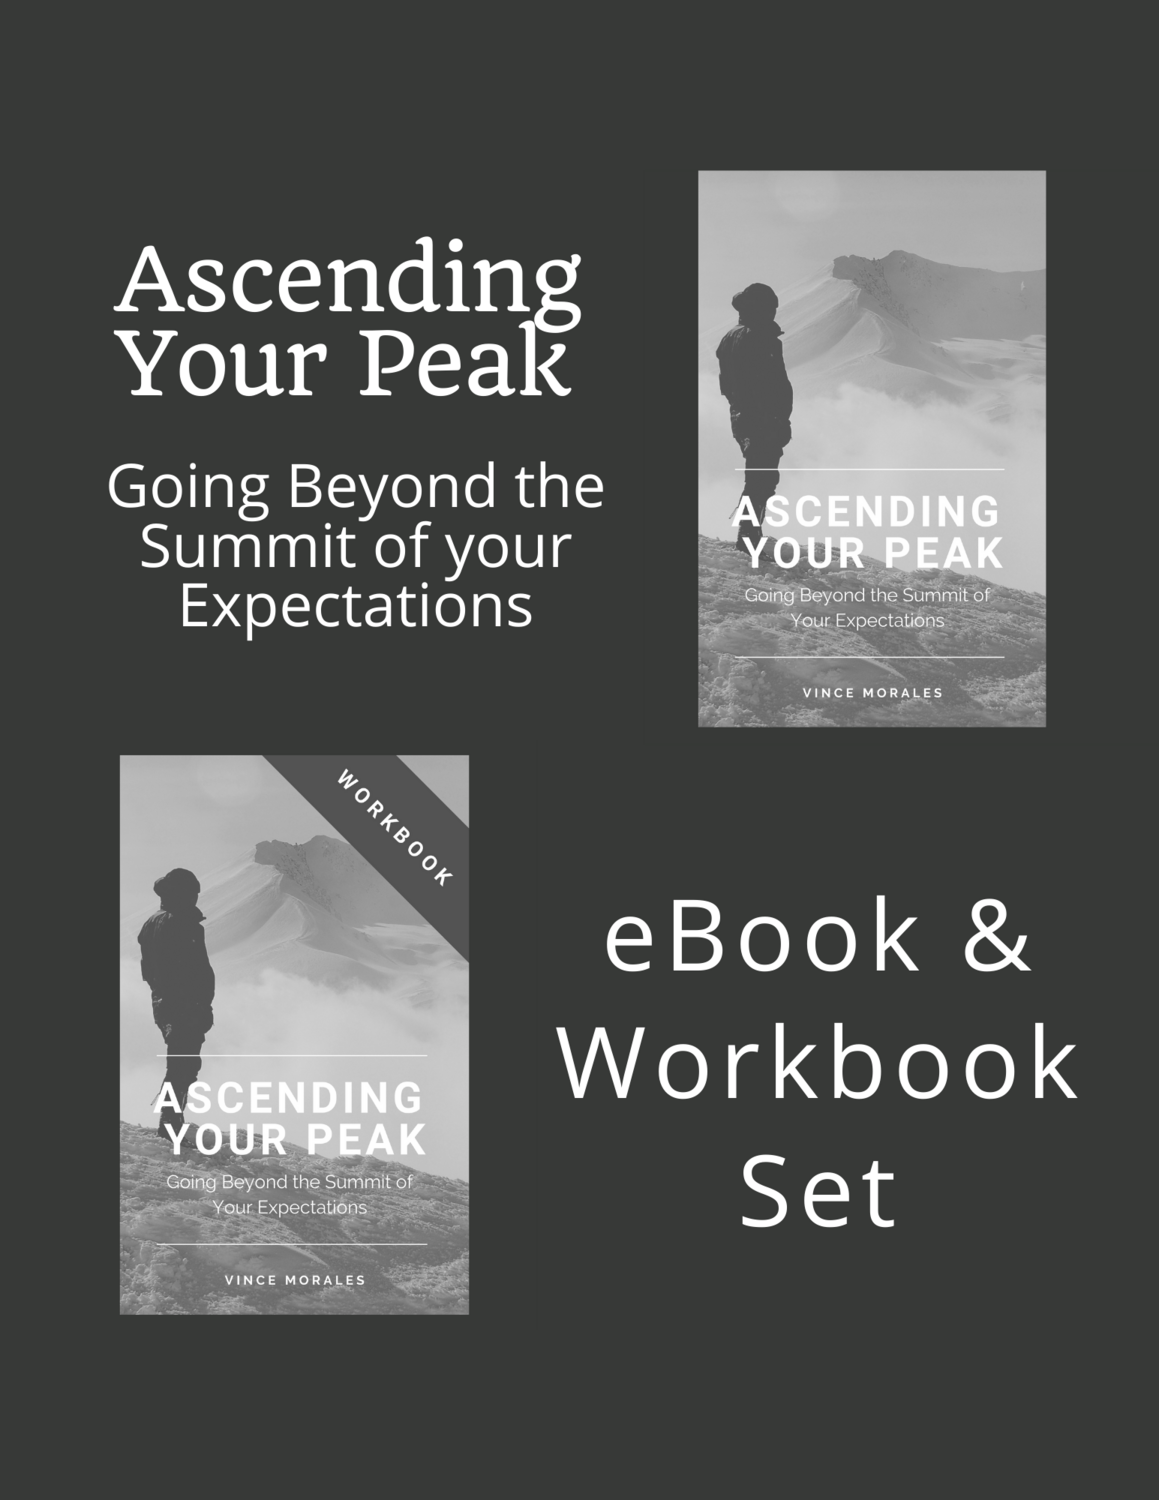 Ascending Your Peak by Vince Morales